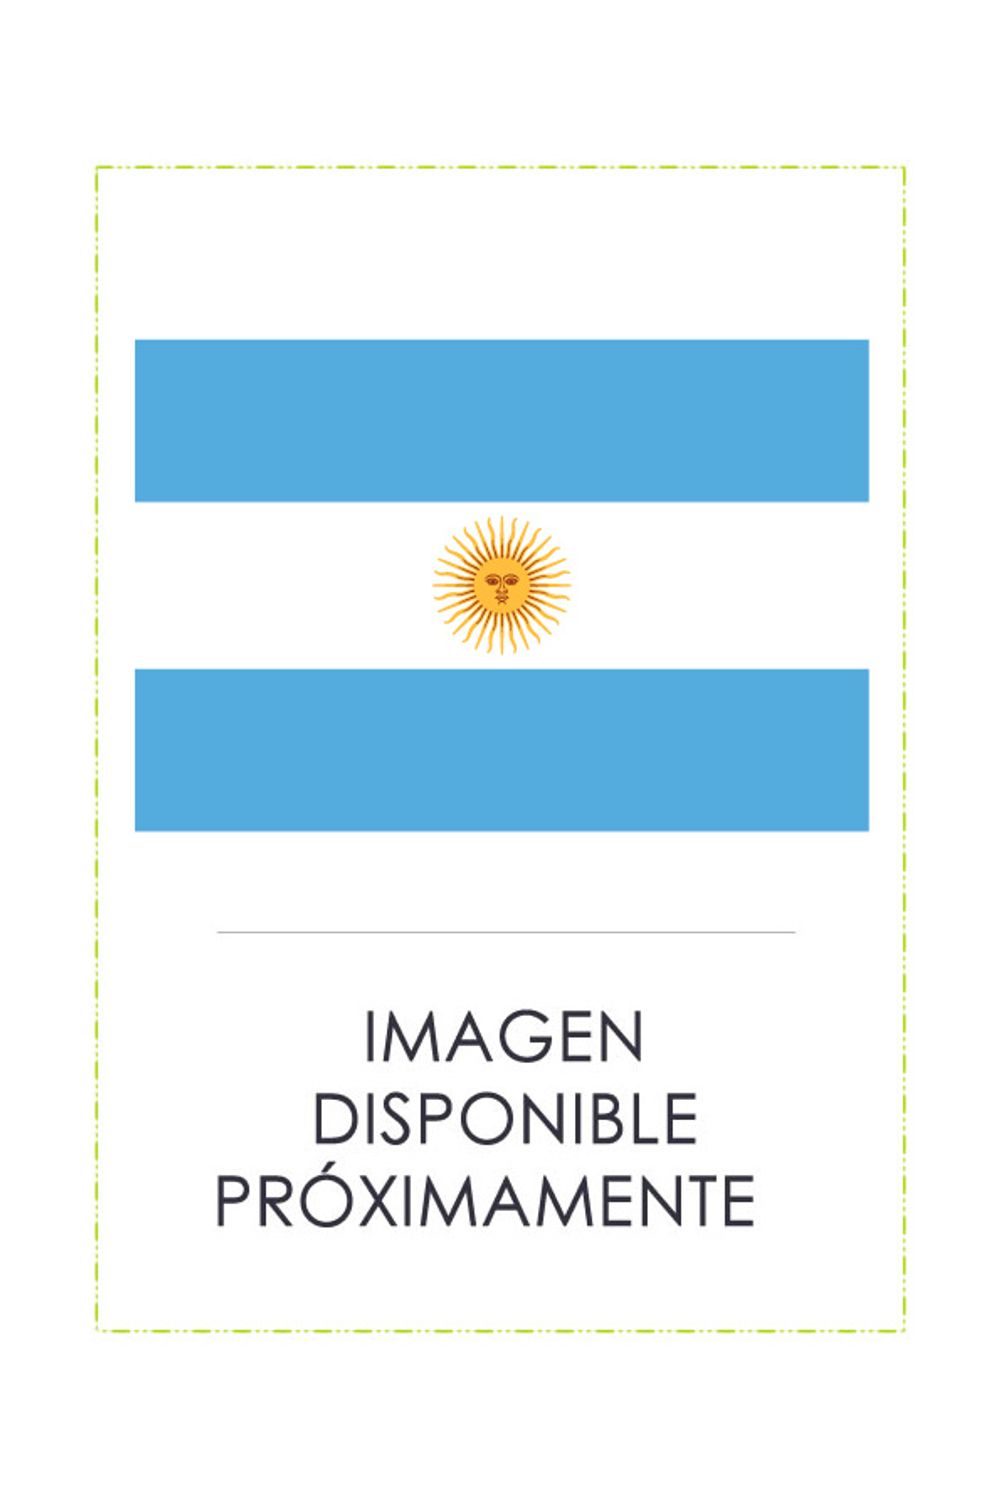 imagen-no-disponible-argentina